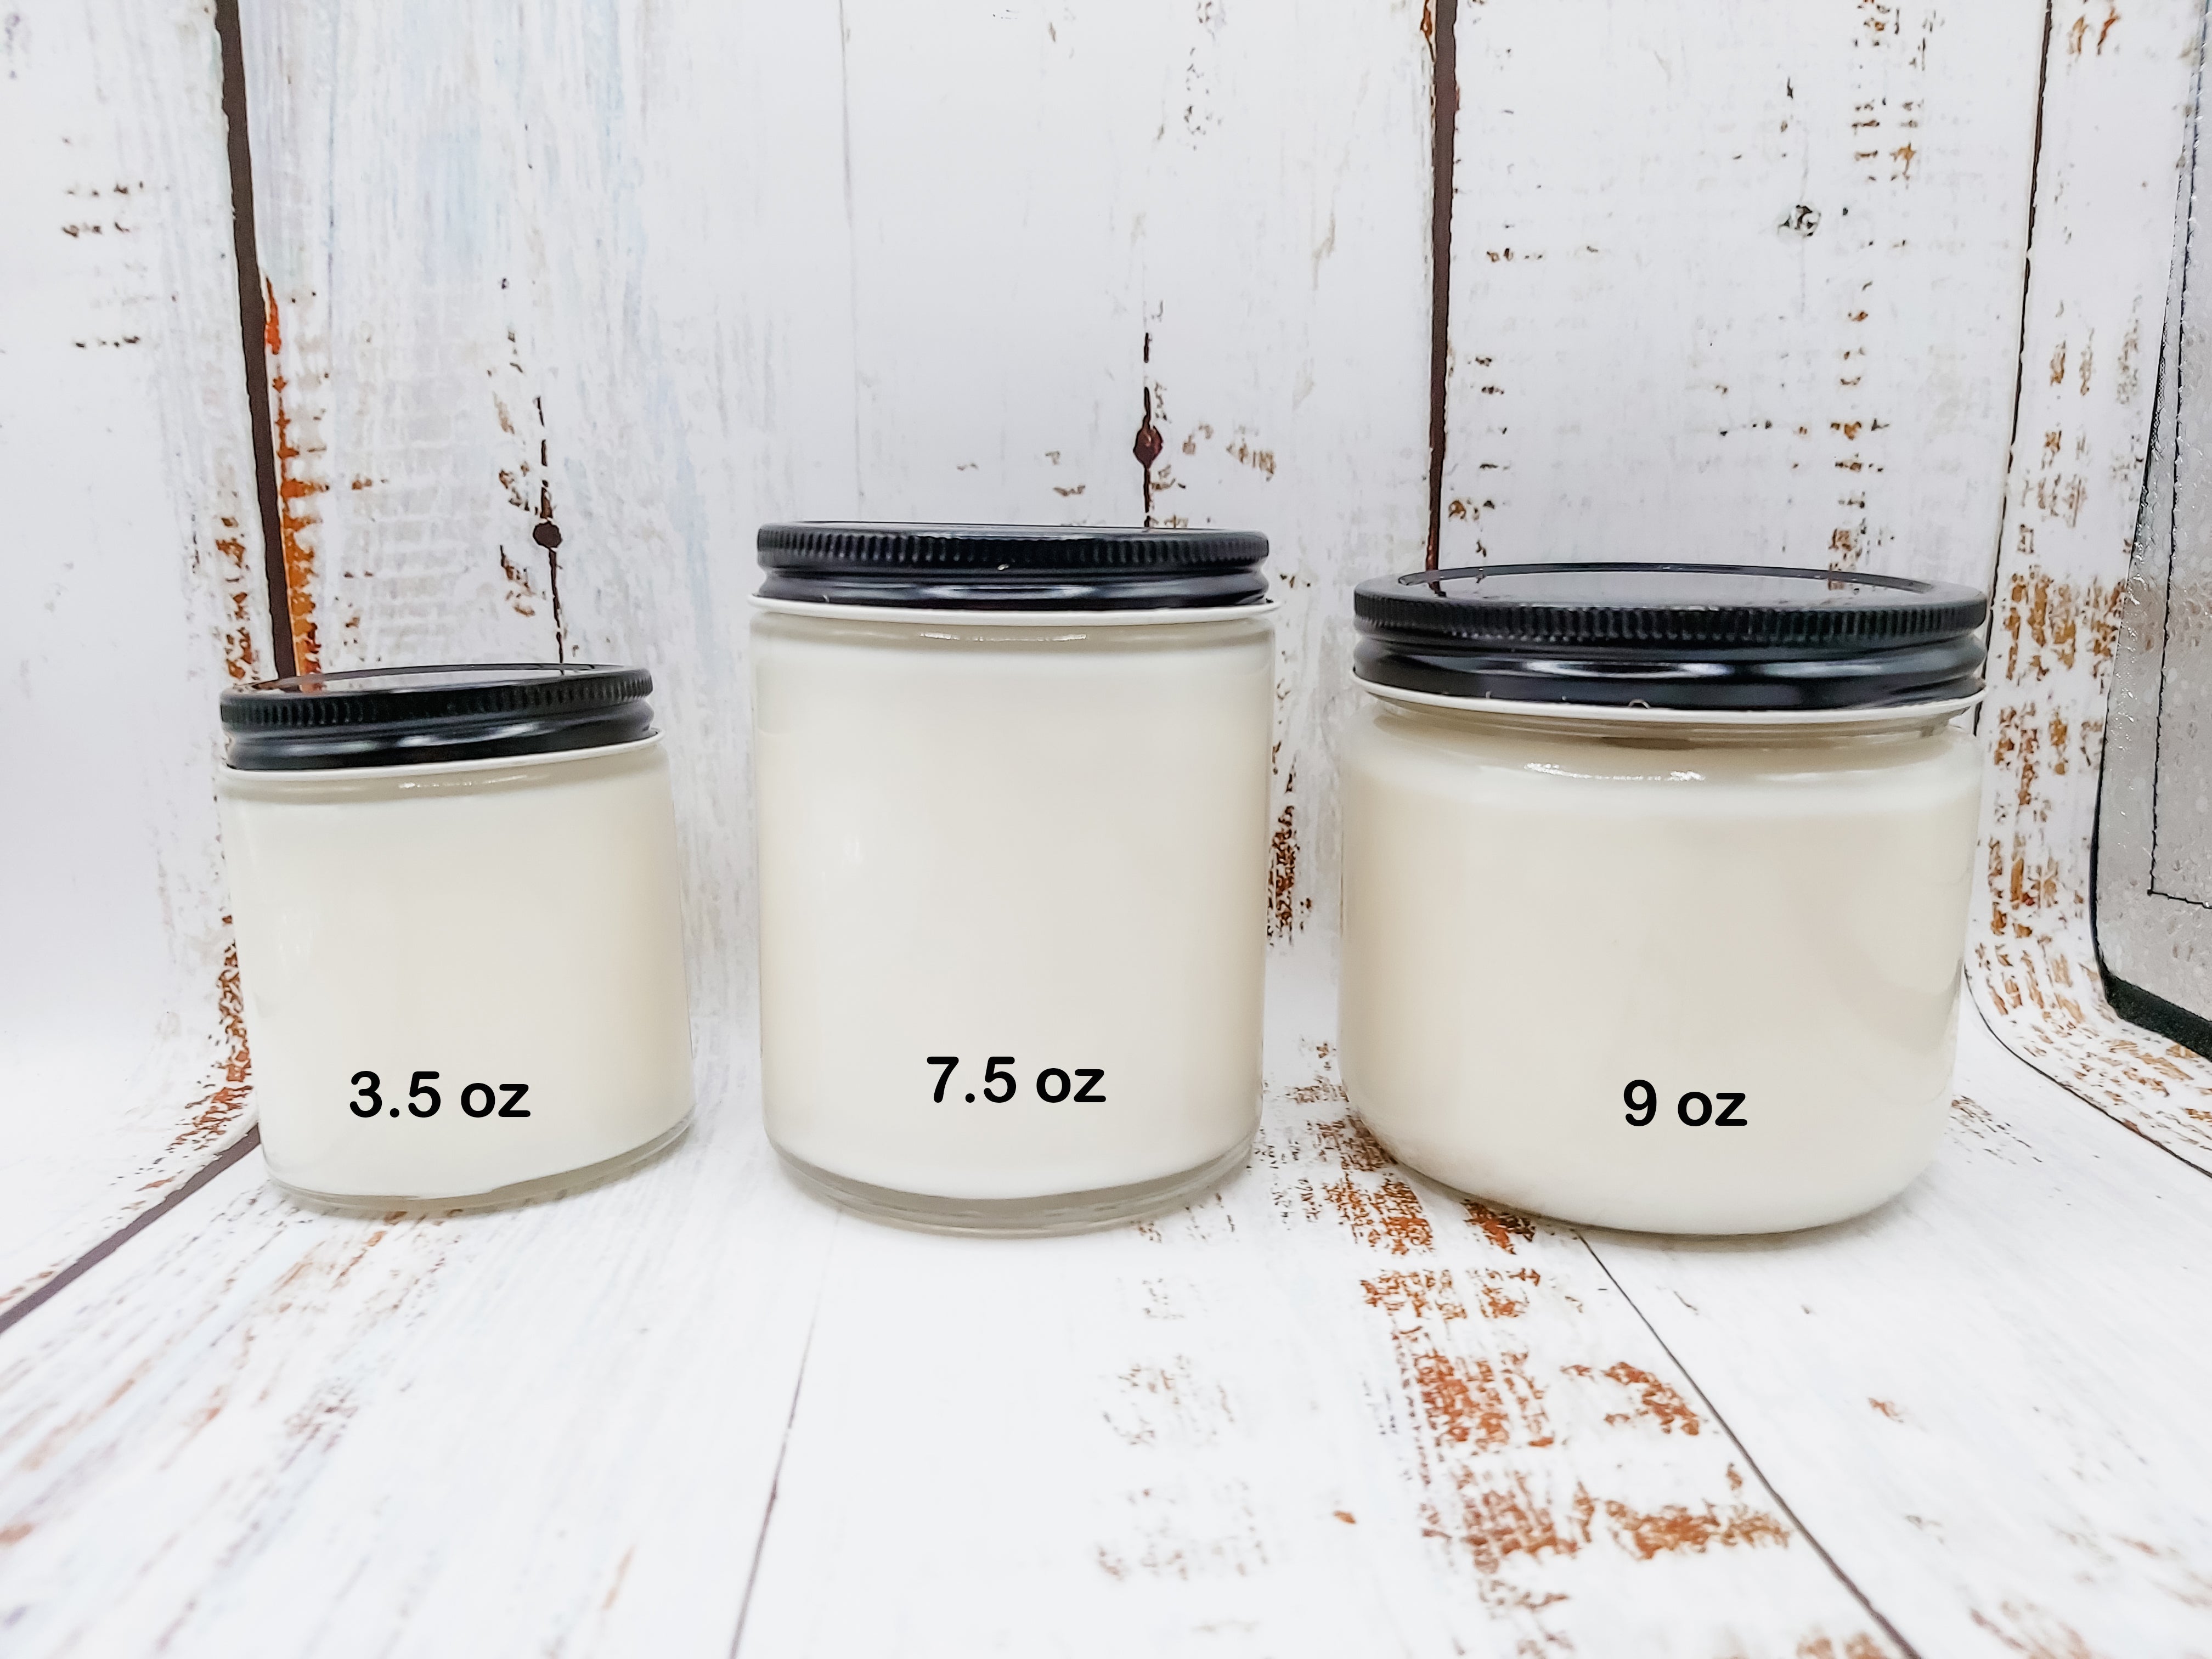 Size comparison for 3 different size jars